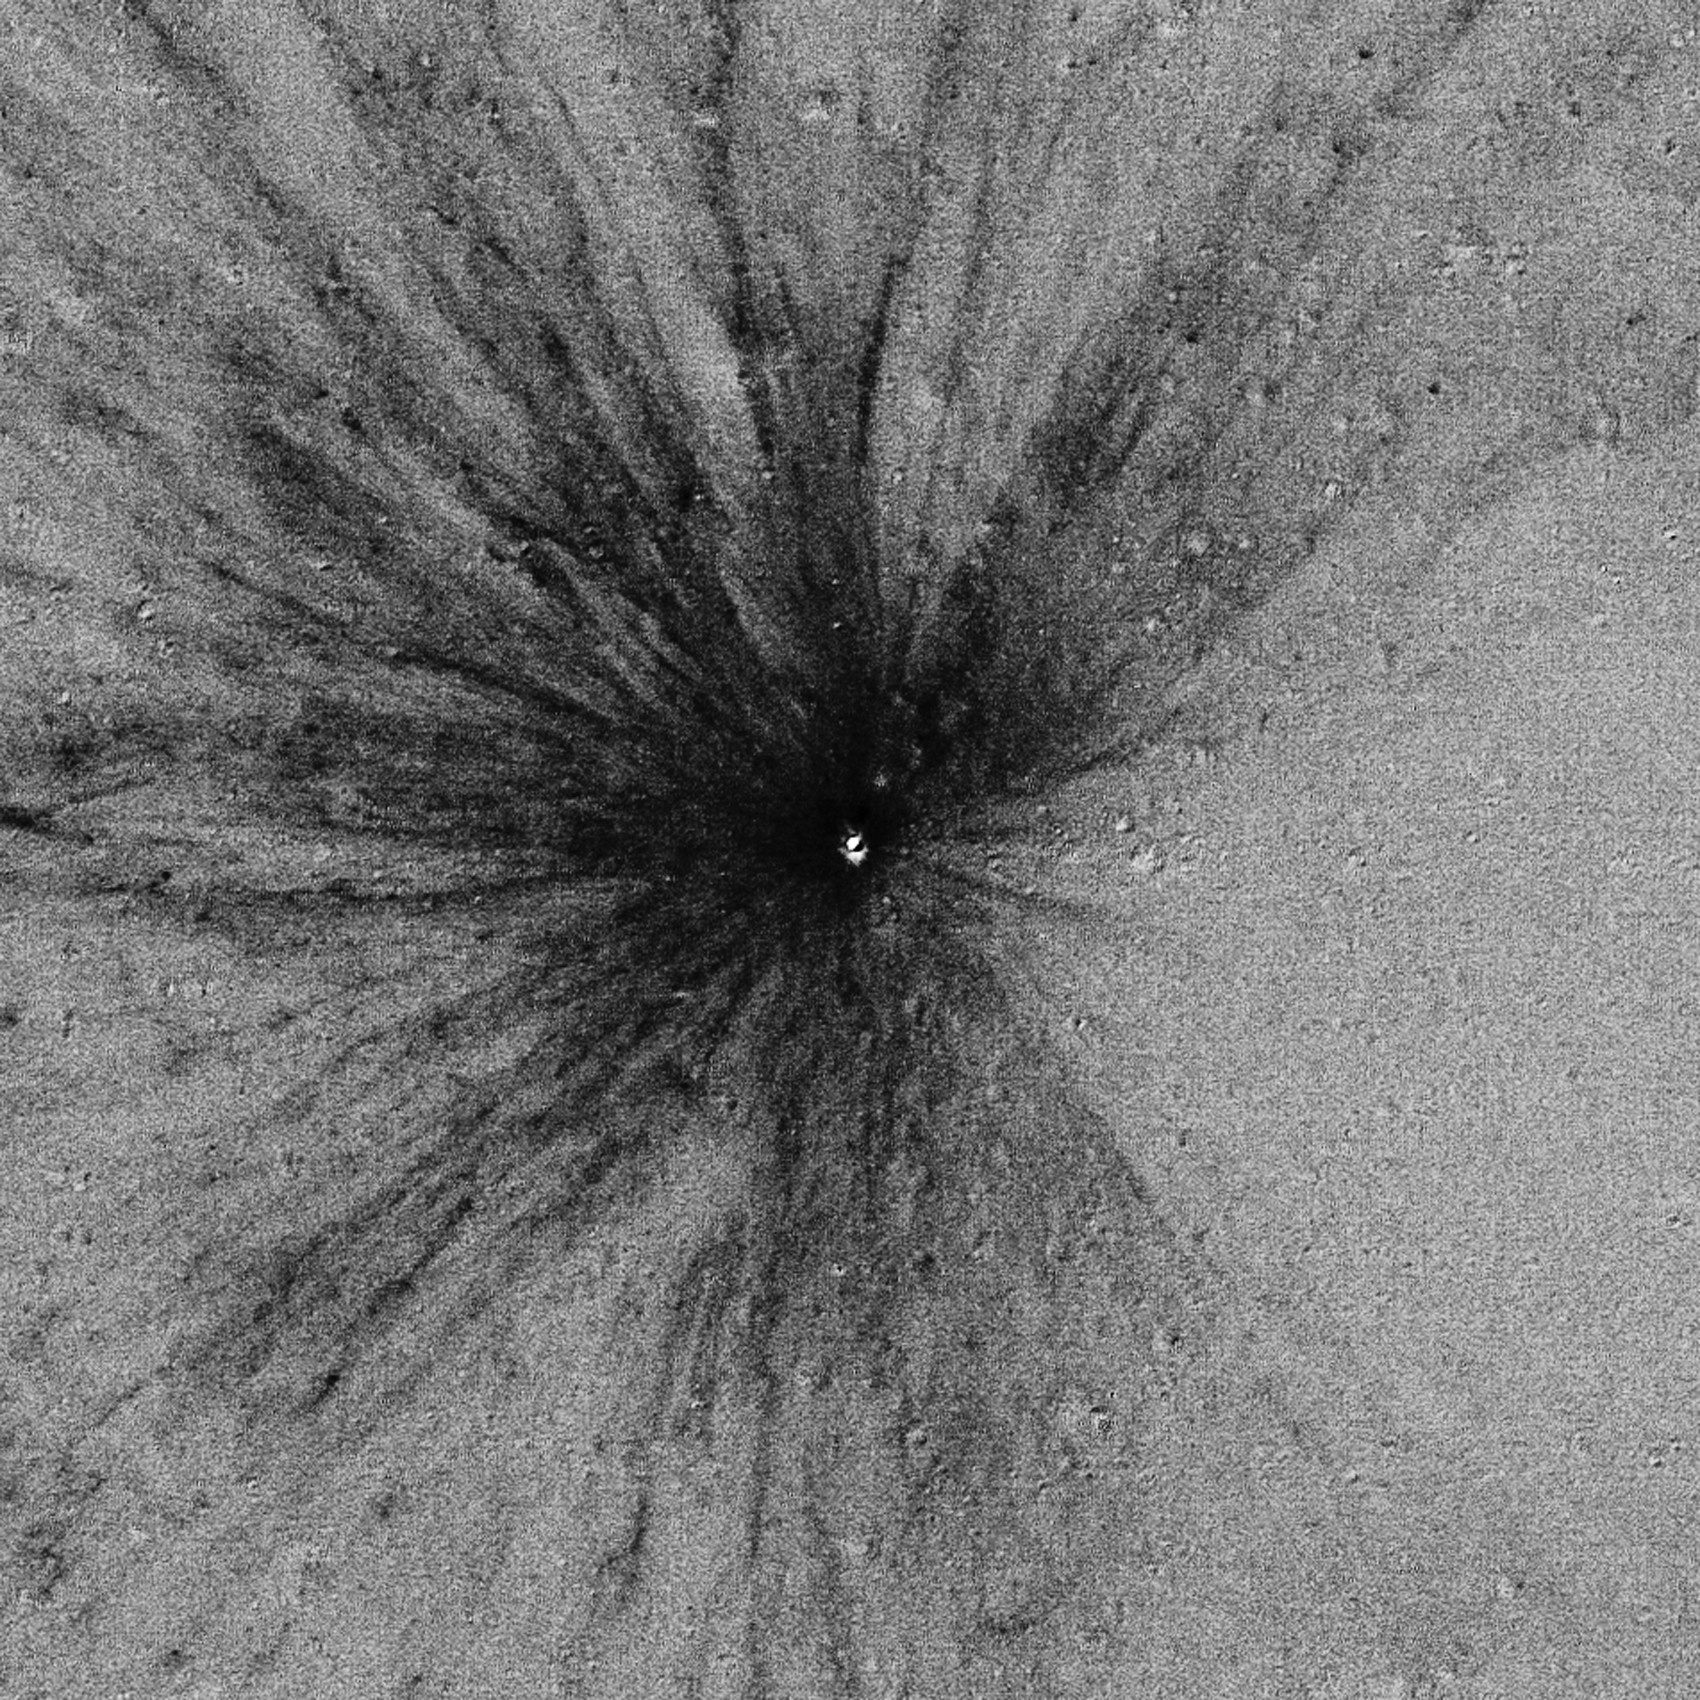 Imagem mostra nova cratera de 12 metros na Lua  (Foto: NASA/GSFC/Arizona State University)